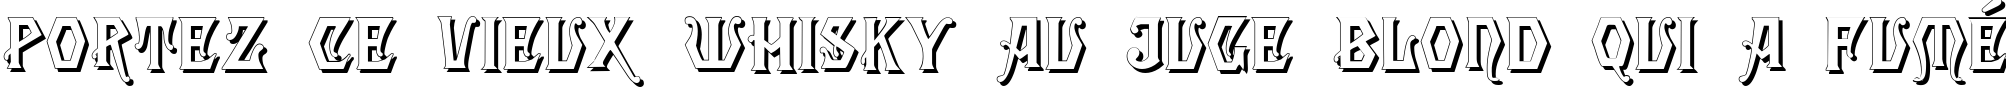 Пример написания шрифтом Angular Shadow текста на французском